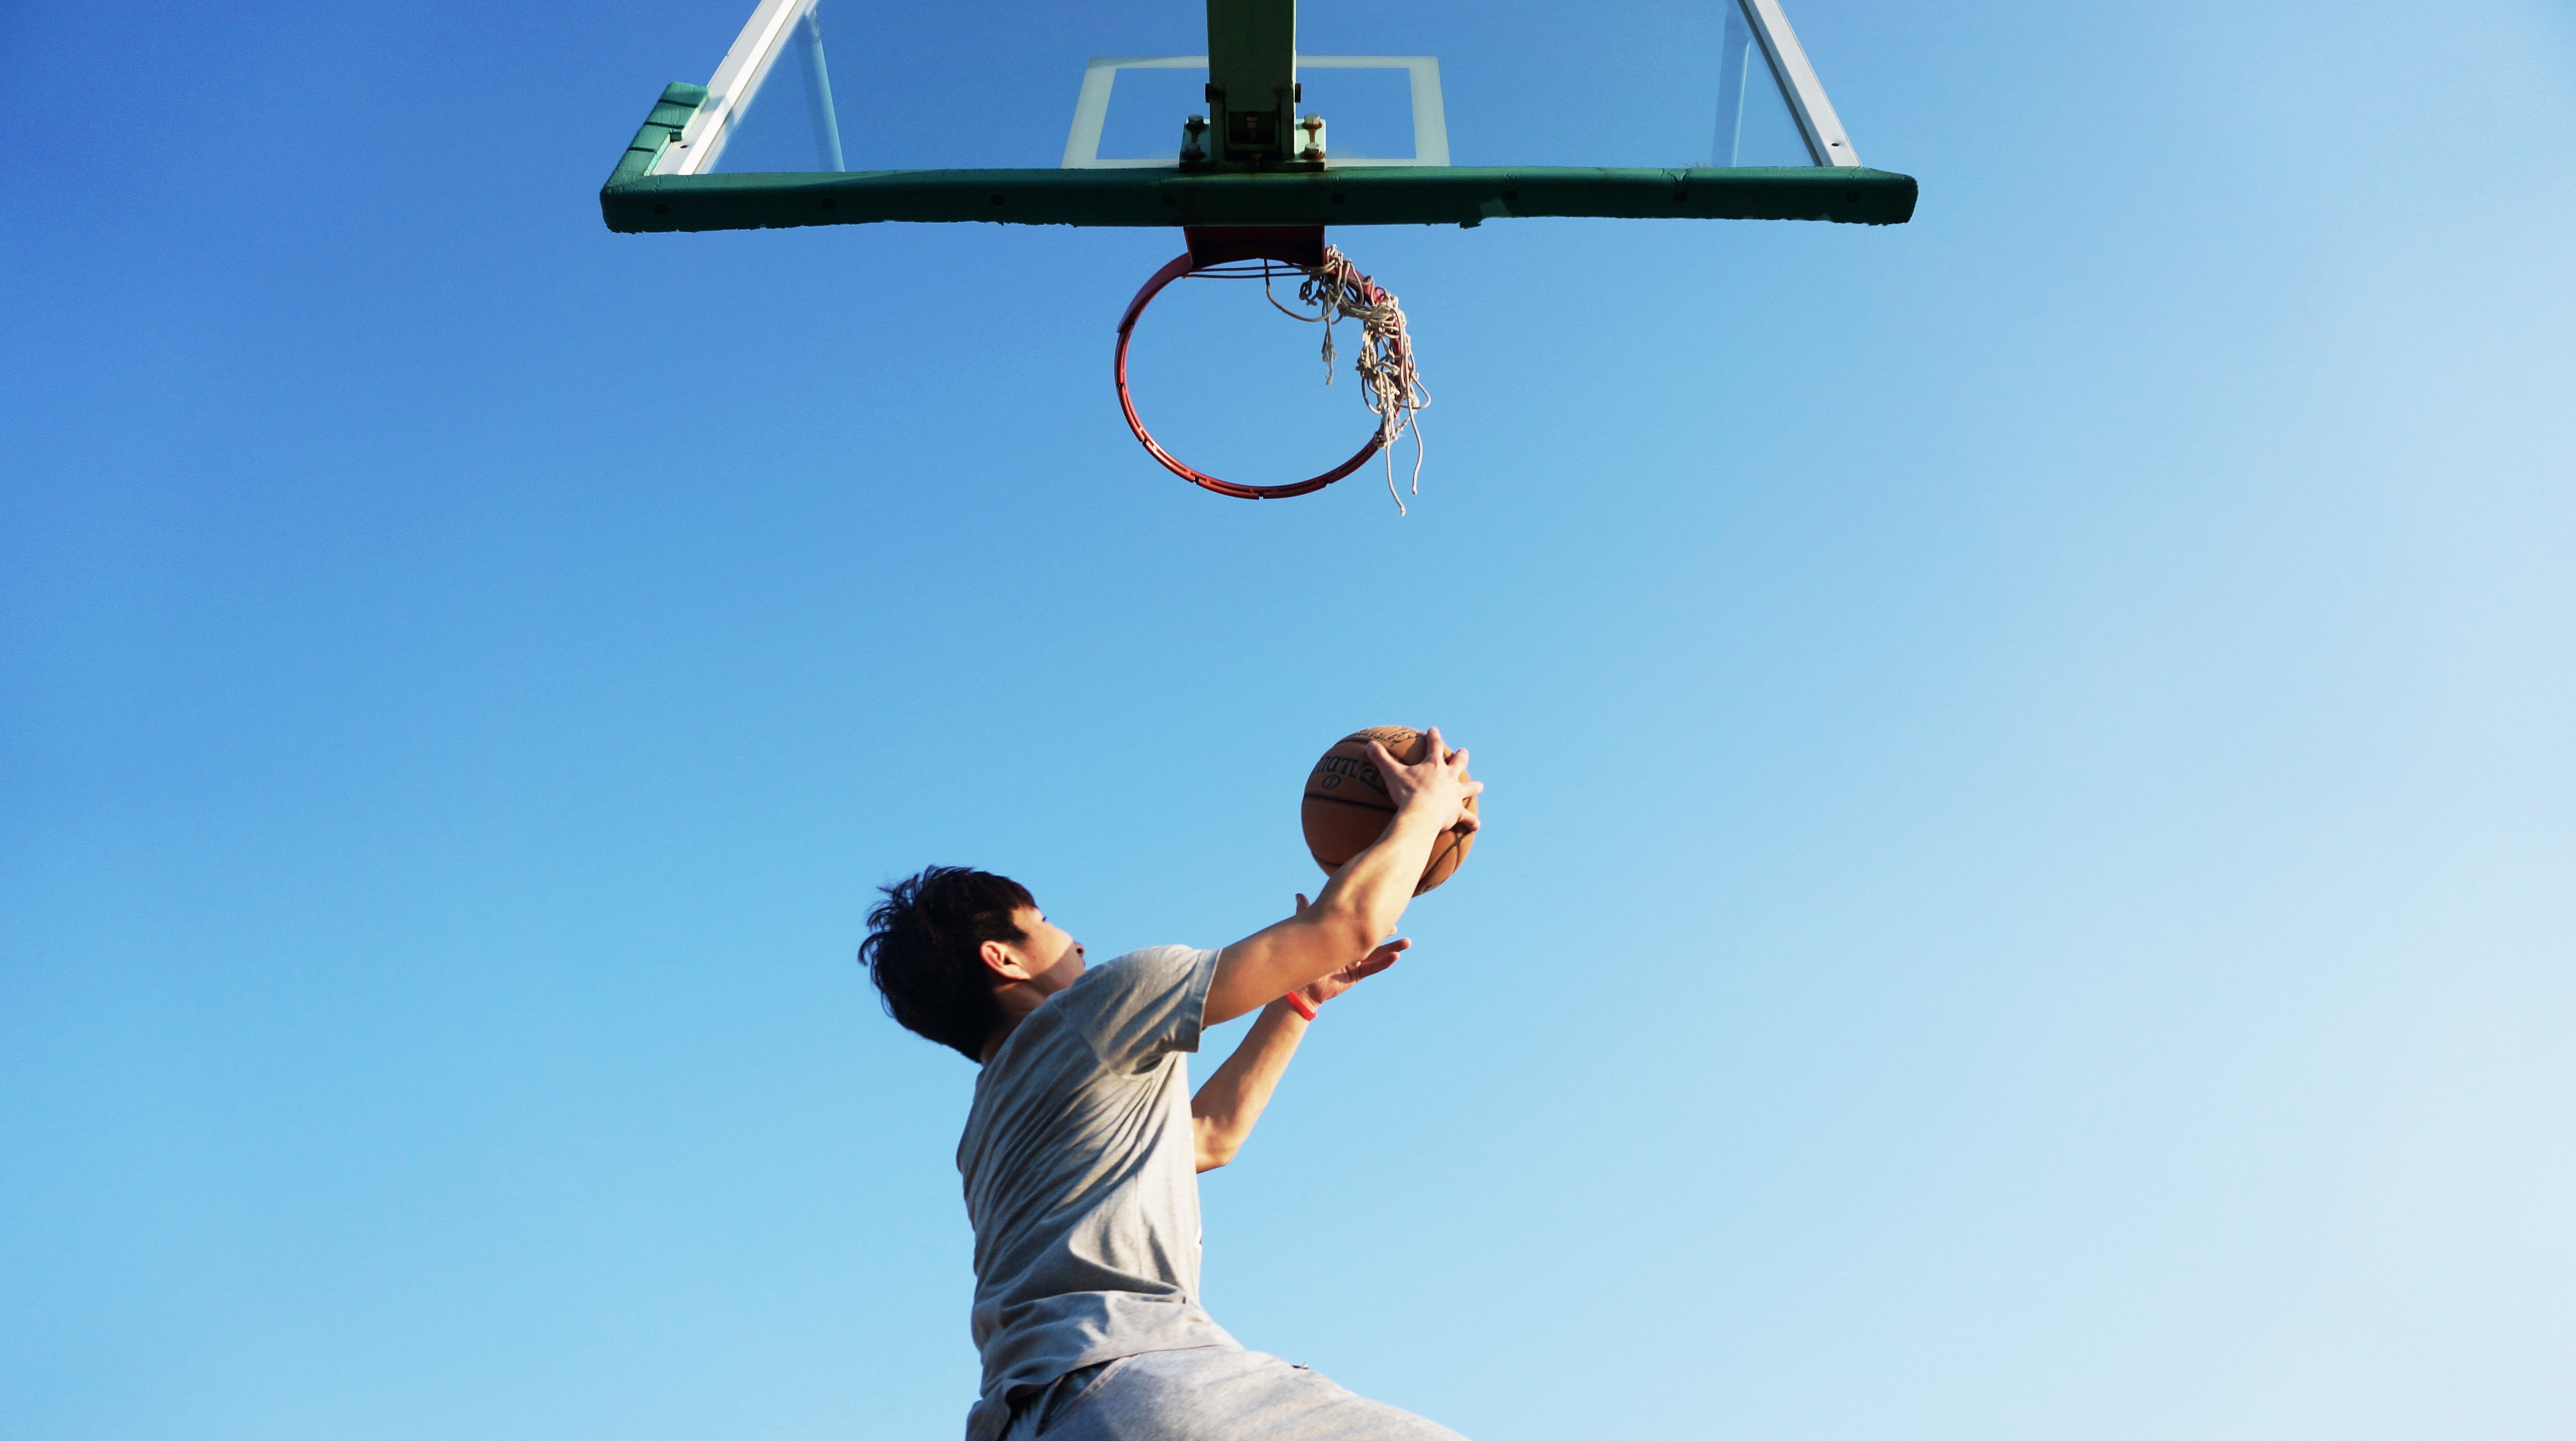 Dunking a basketball